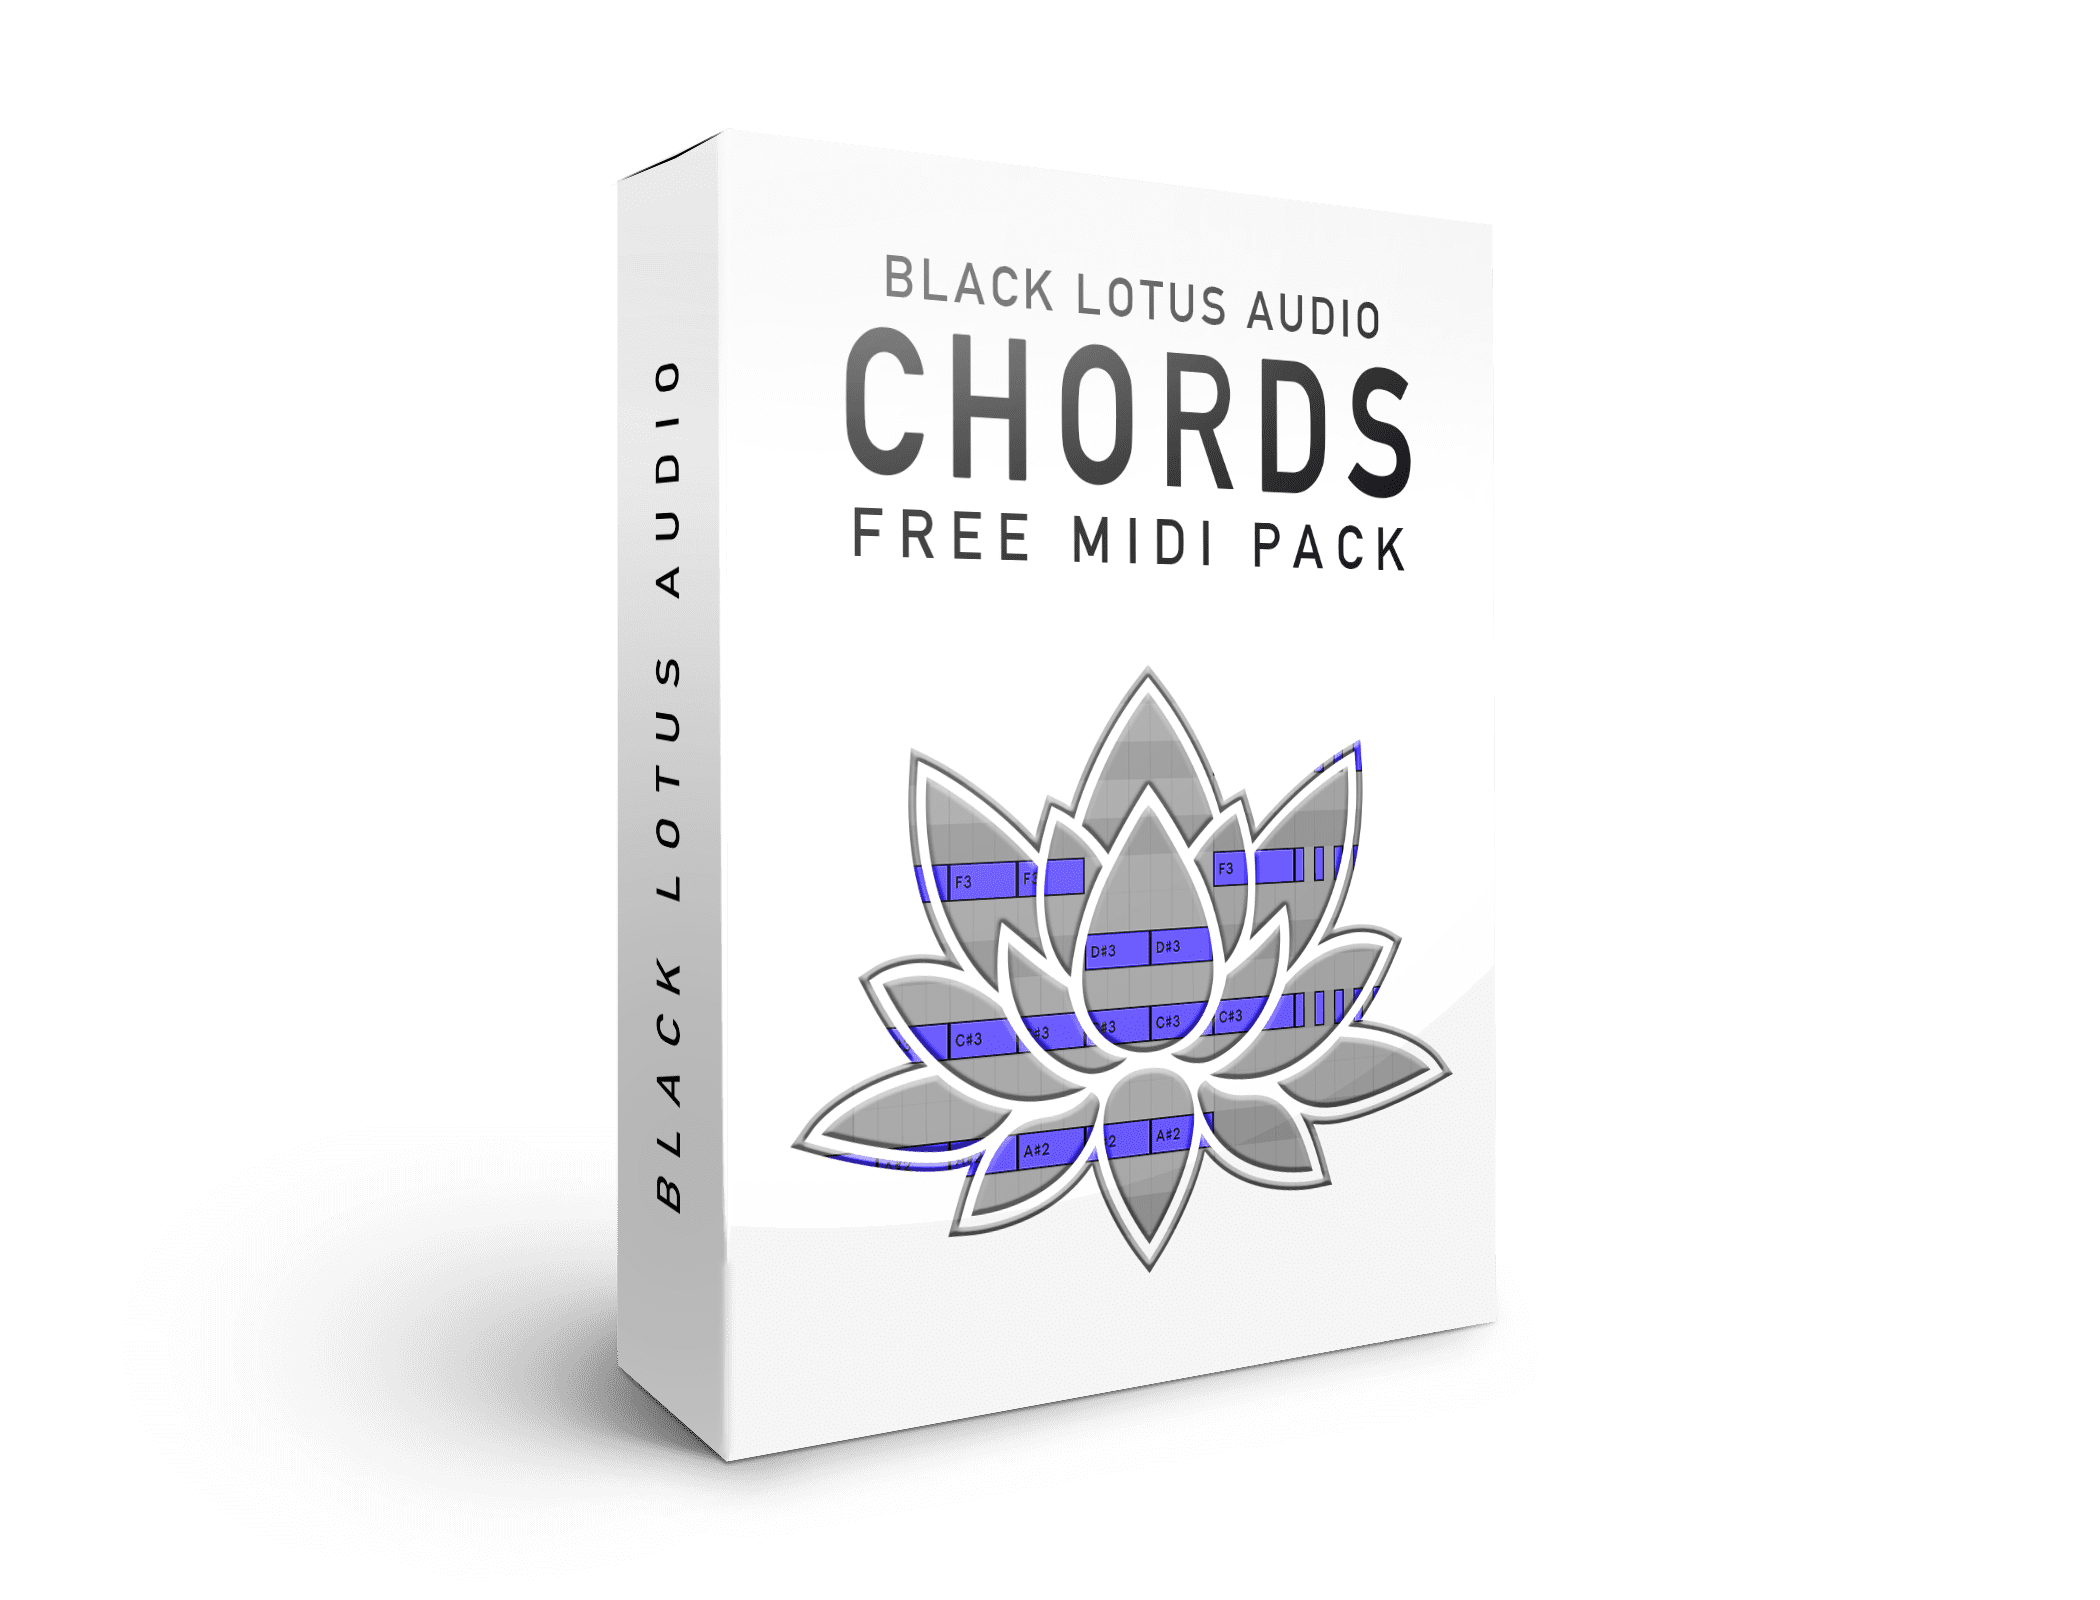 Free MIDI Chord Pack - Chords By Black Lotus Audio